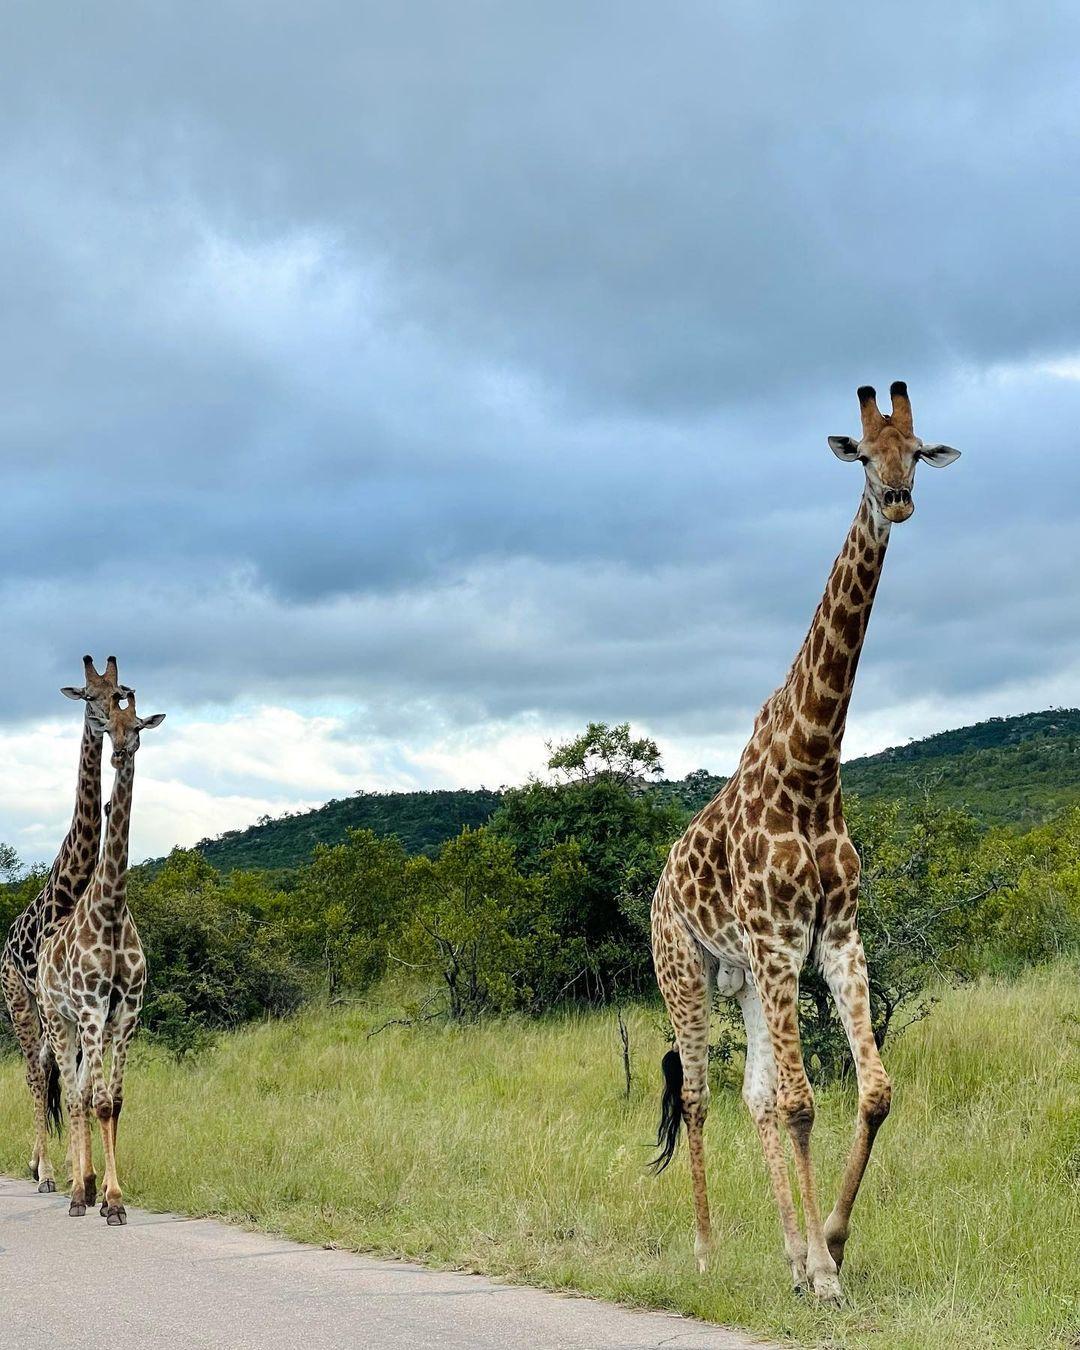 class="content__text"
 Another lucky #gamedrive with @jocksafari ranger Jacob “bad driver “ 👌🏻 the best 
🦒🦓🤩

 #krugernationalpark #giraffes #wildlifeperfection #safarilife 
 